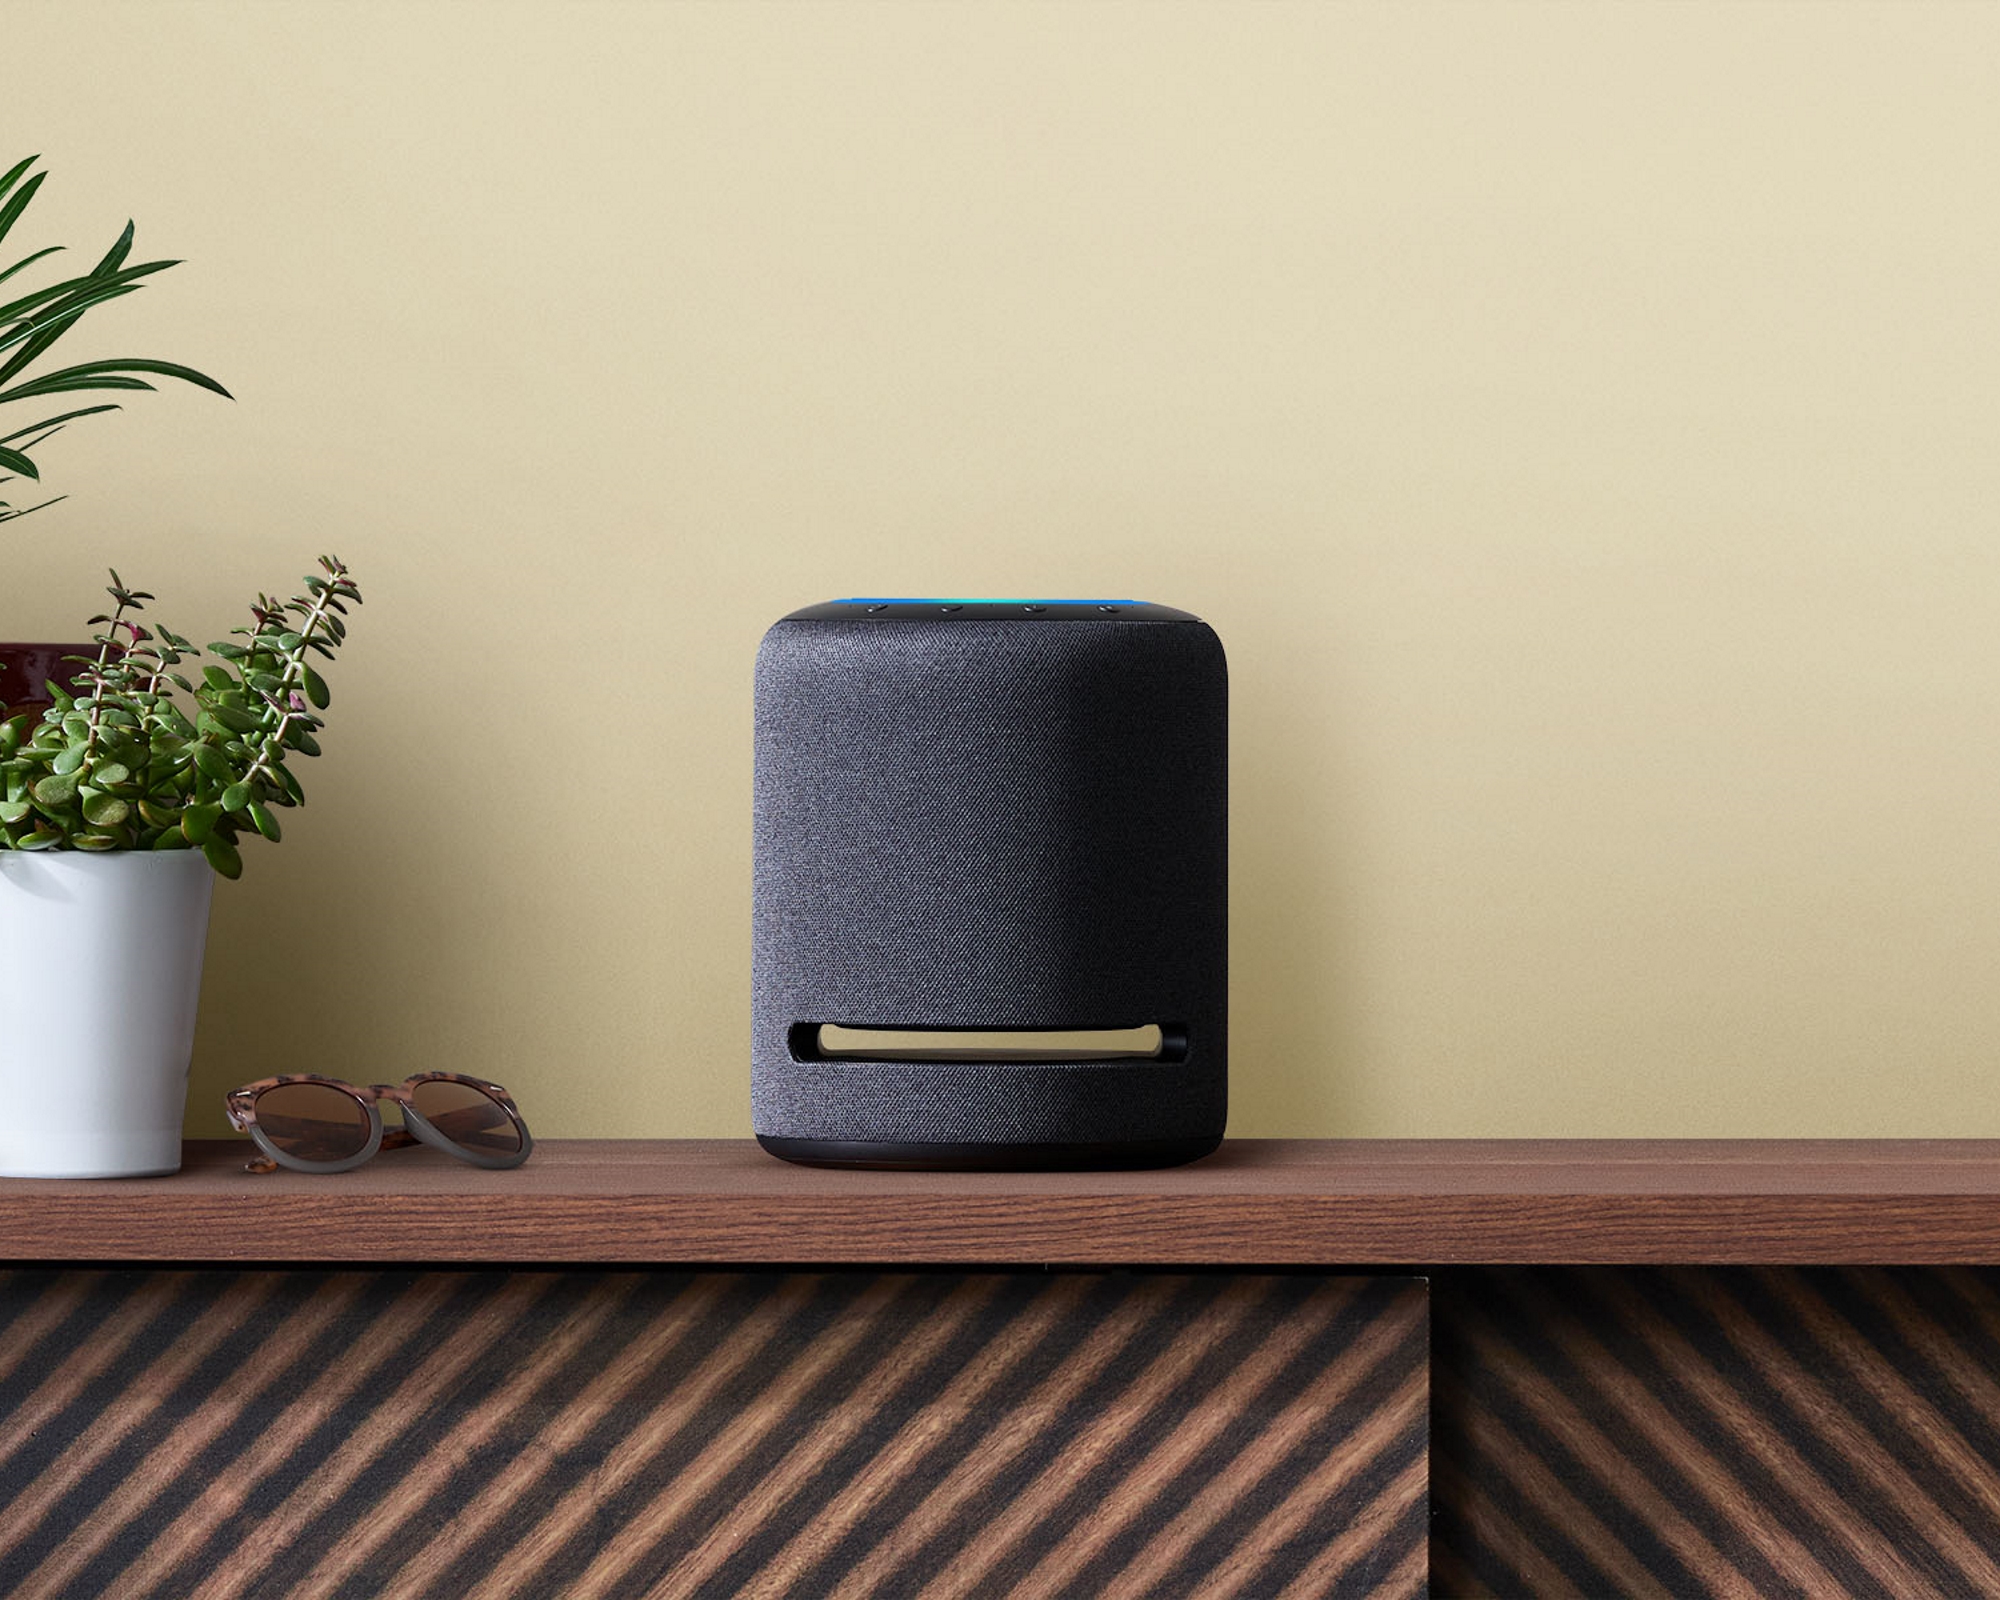 Amazon Echo Studio smart speaker